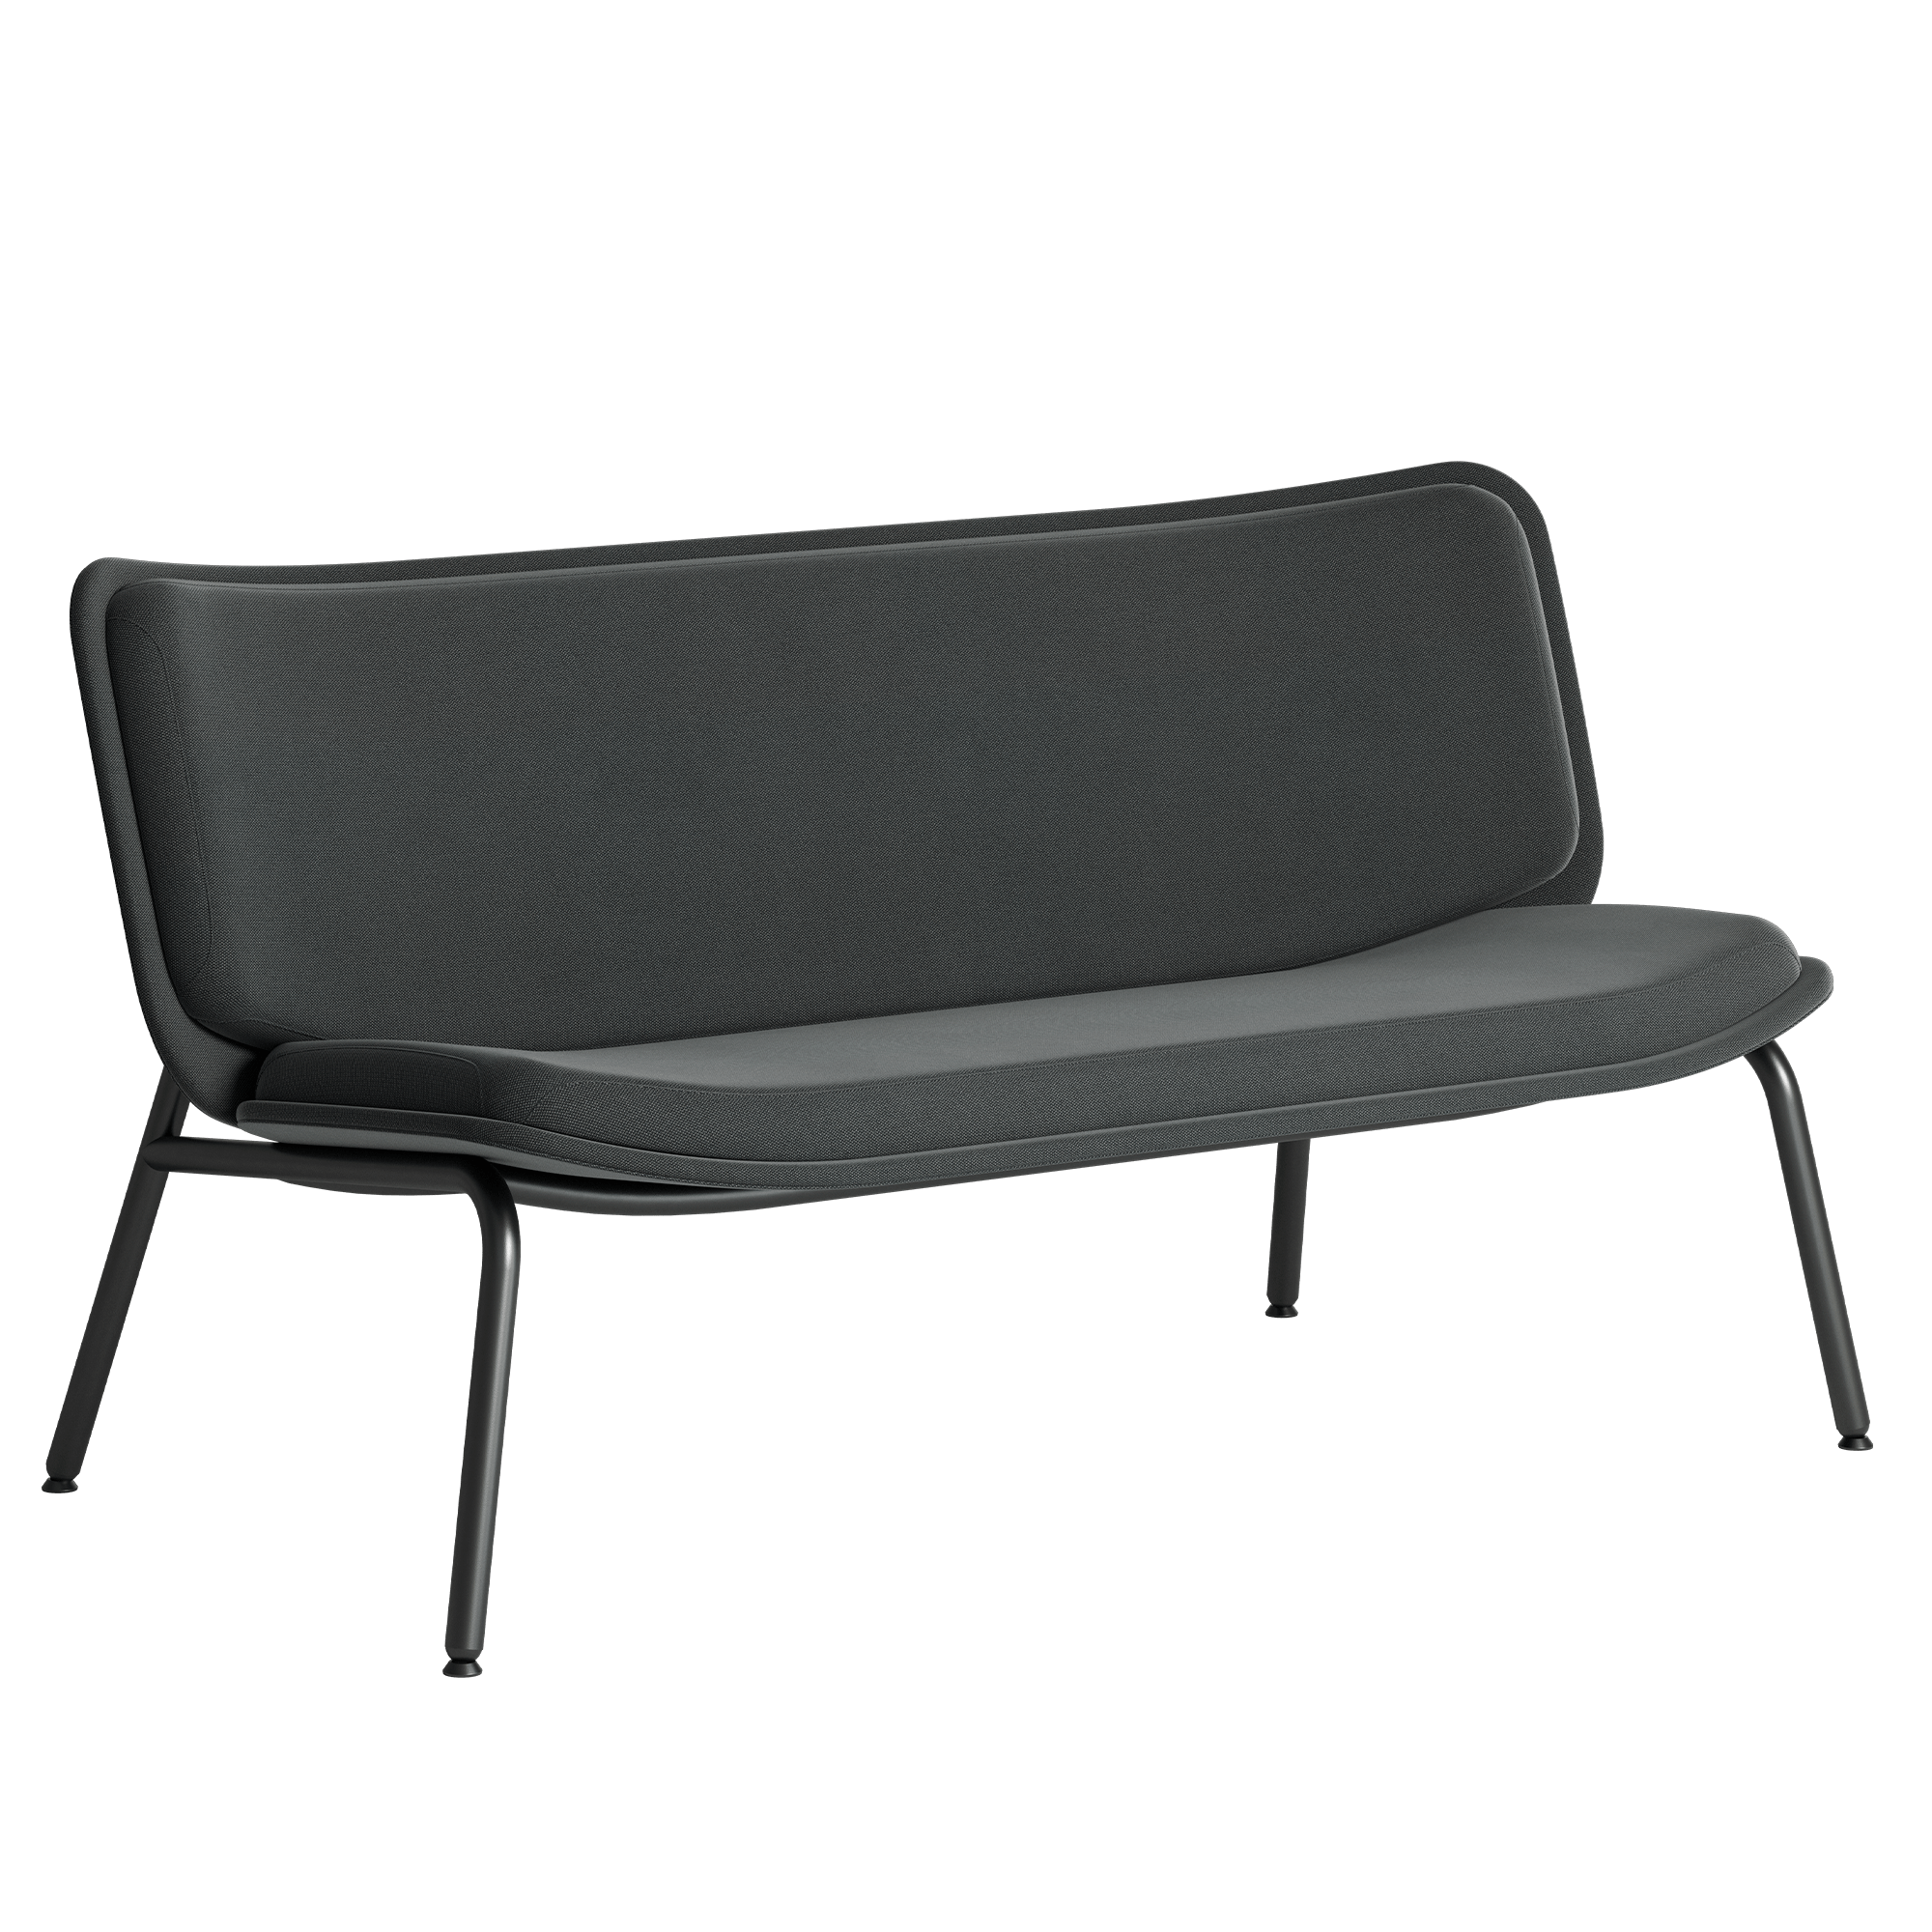 A black sofa with black legs